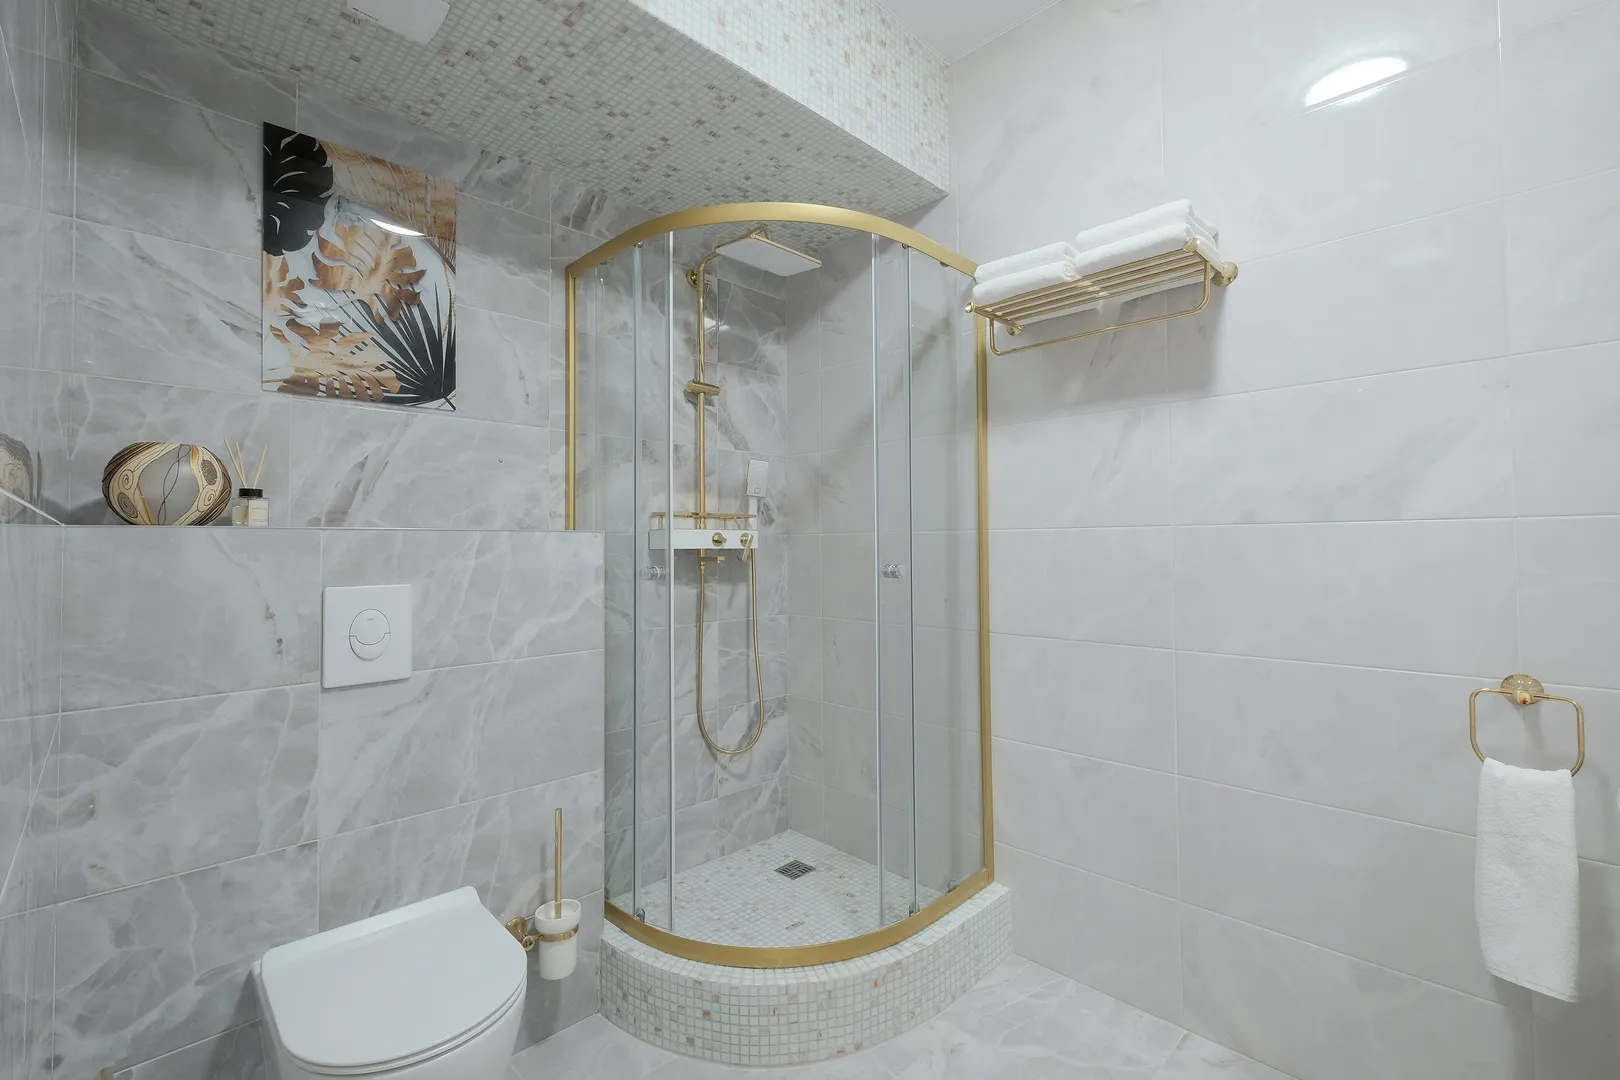 Ванная комната, душевая кабина, тропический душ, полотенца